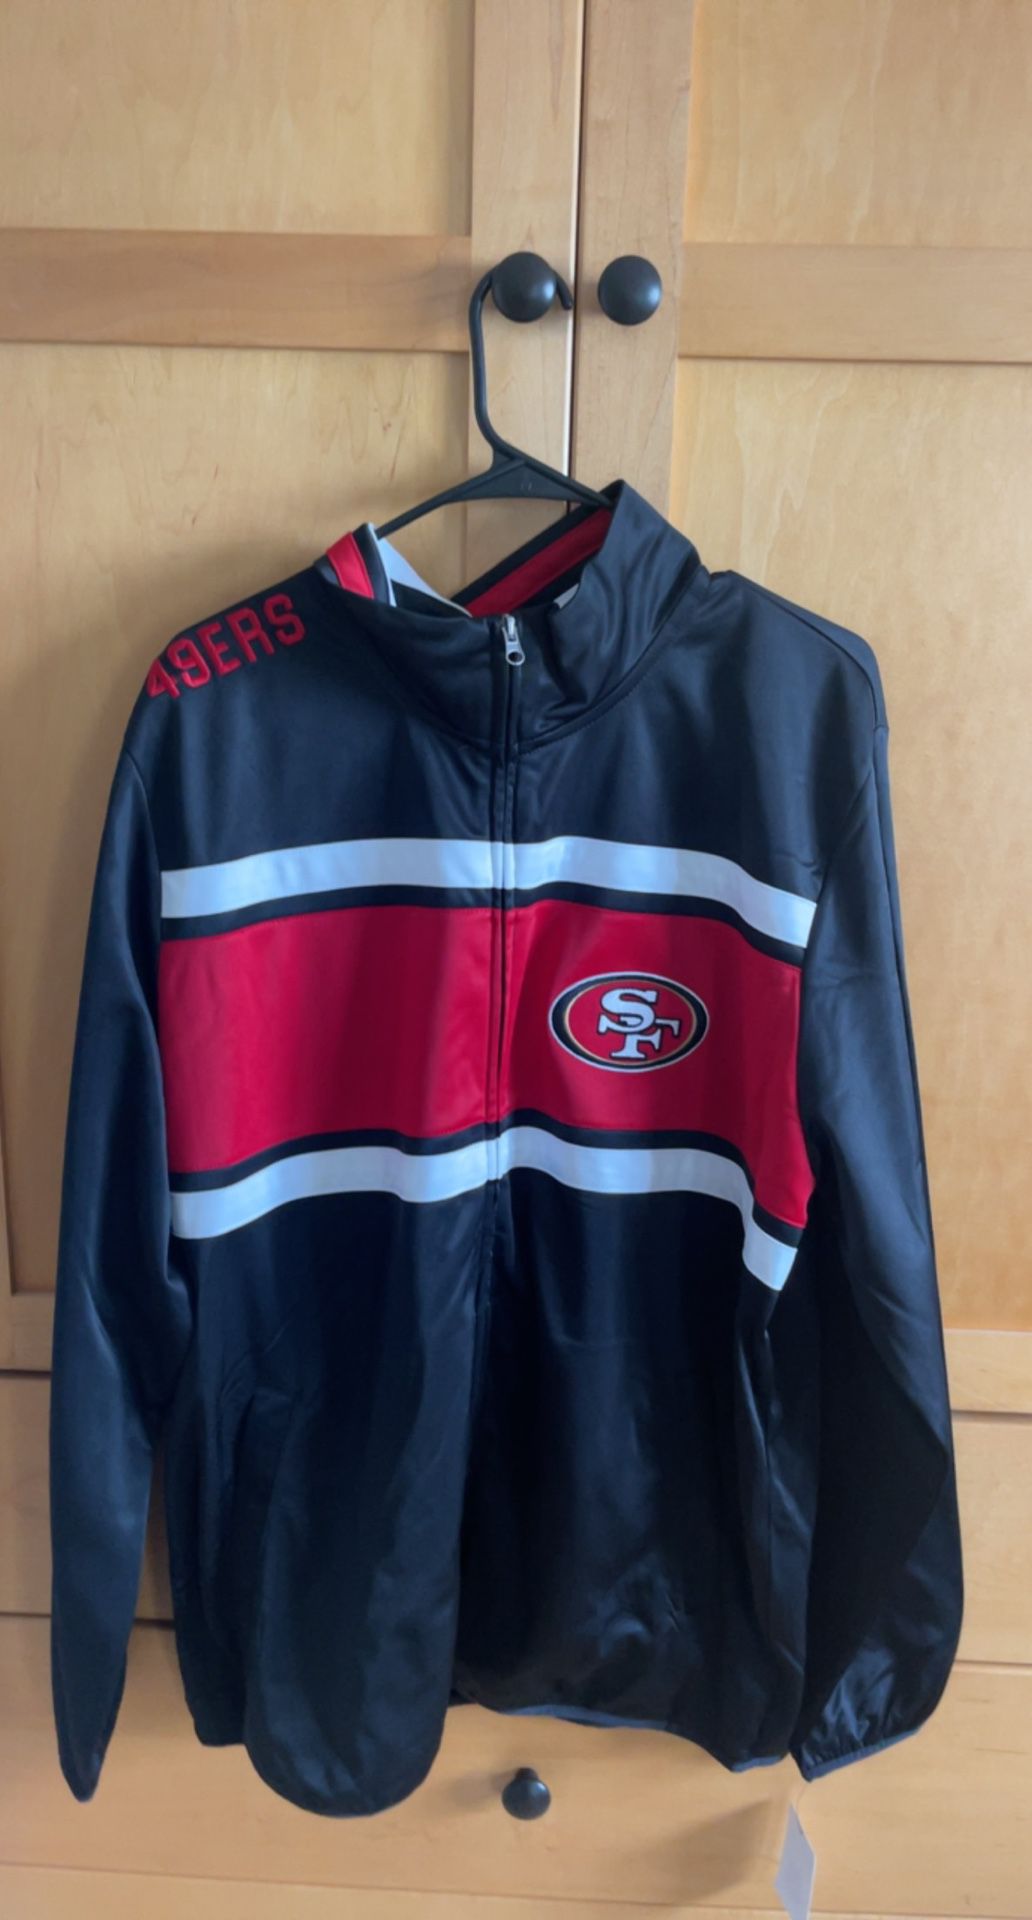 49ers Zip up jacket.   Stitched 